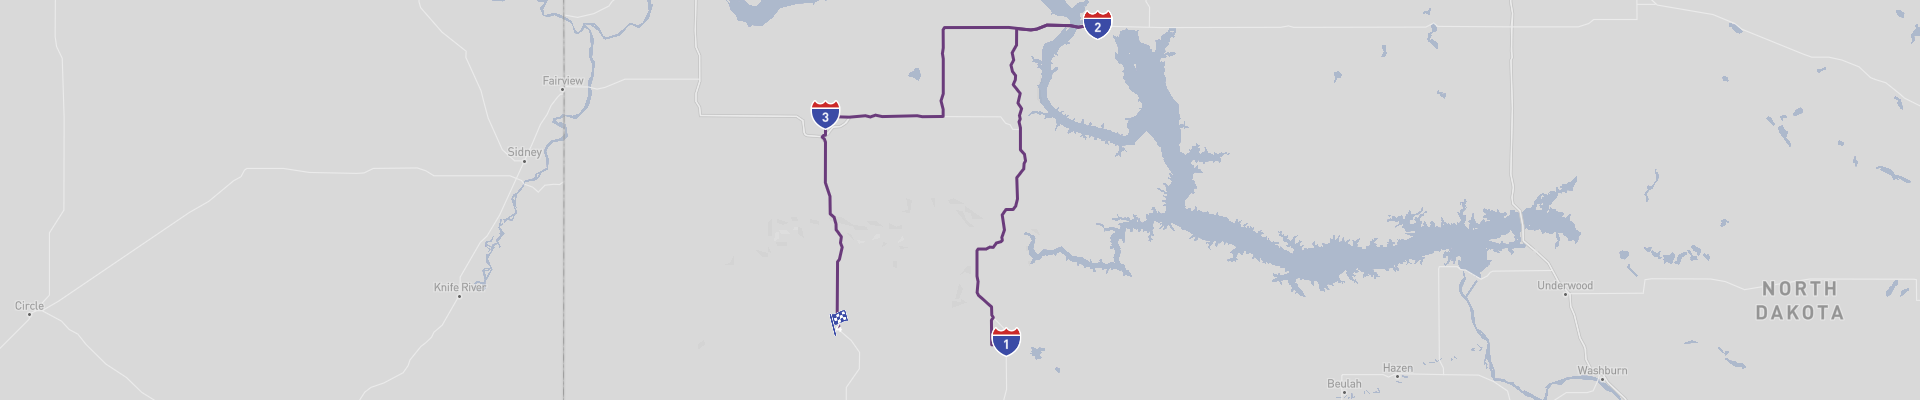 Itinéraire du Dakota du Nord 22